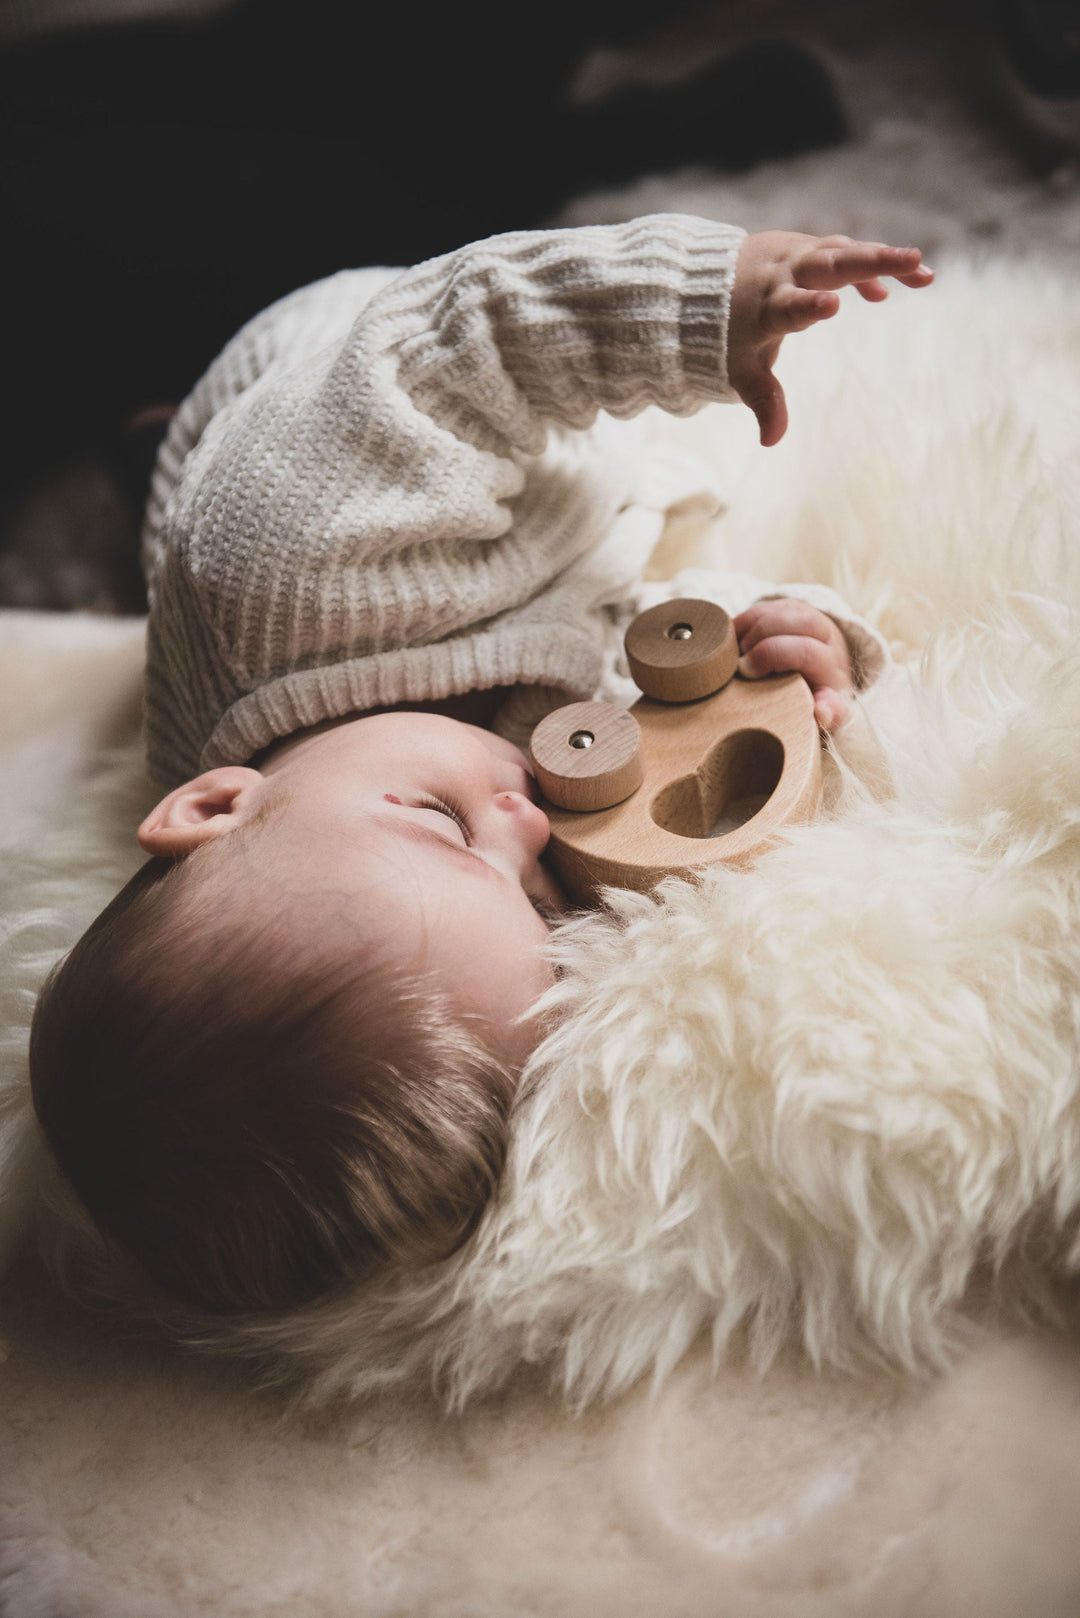 Can a baby sleep on sheepskin?